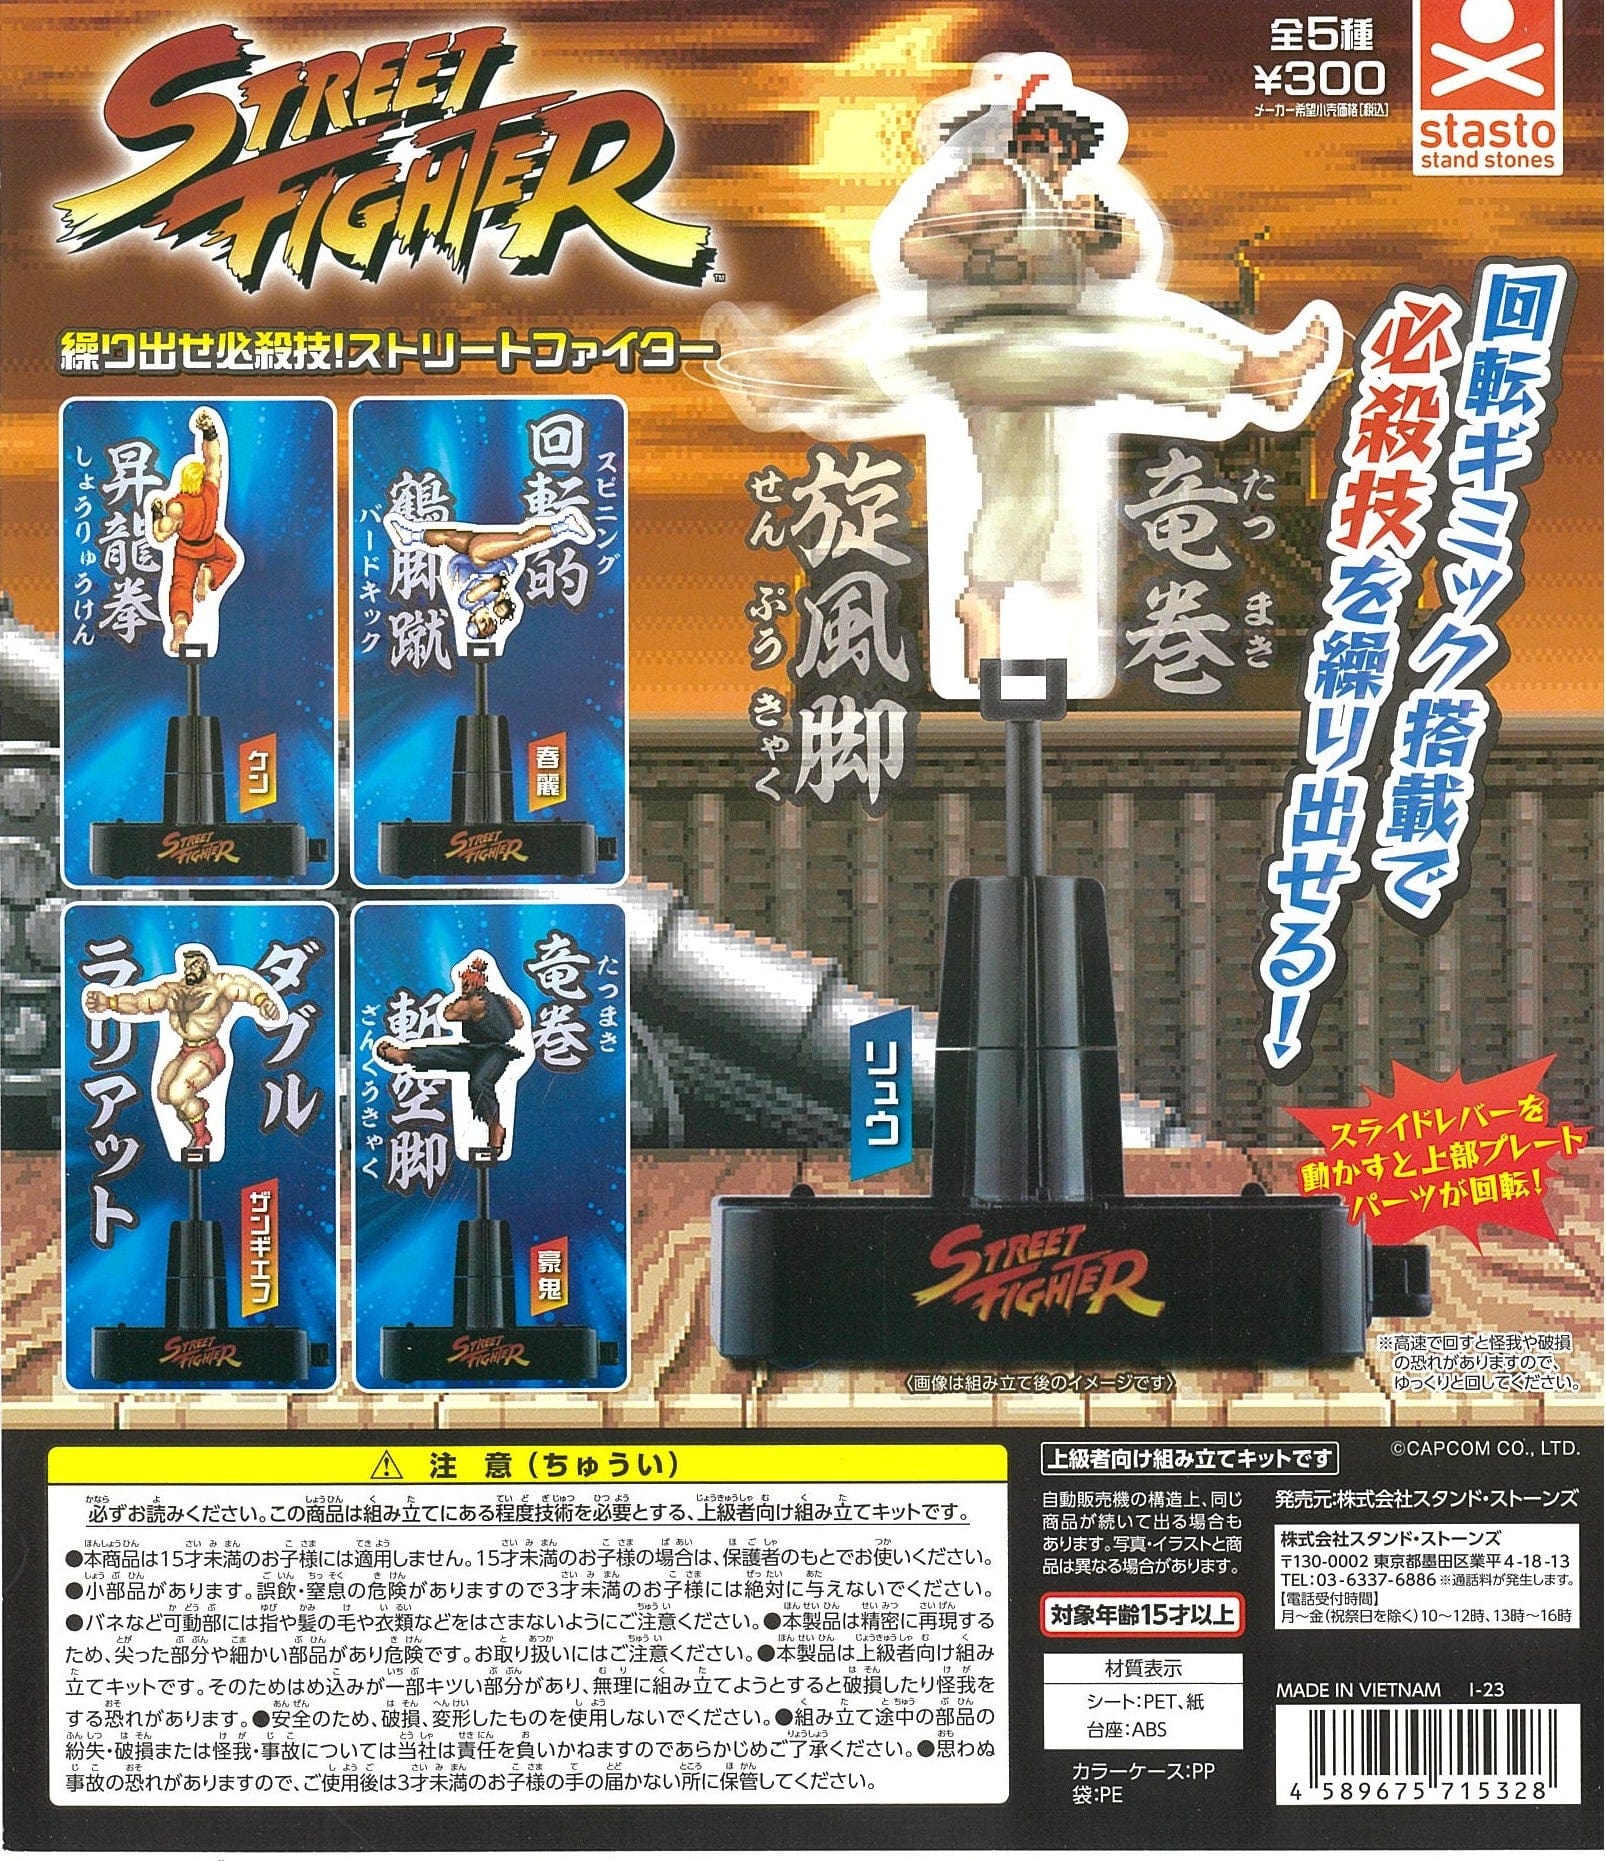 STASTO CP2470 Kuridase Hissatsuwaza ! Street Fighter